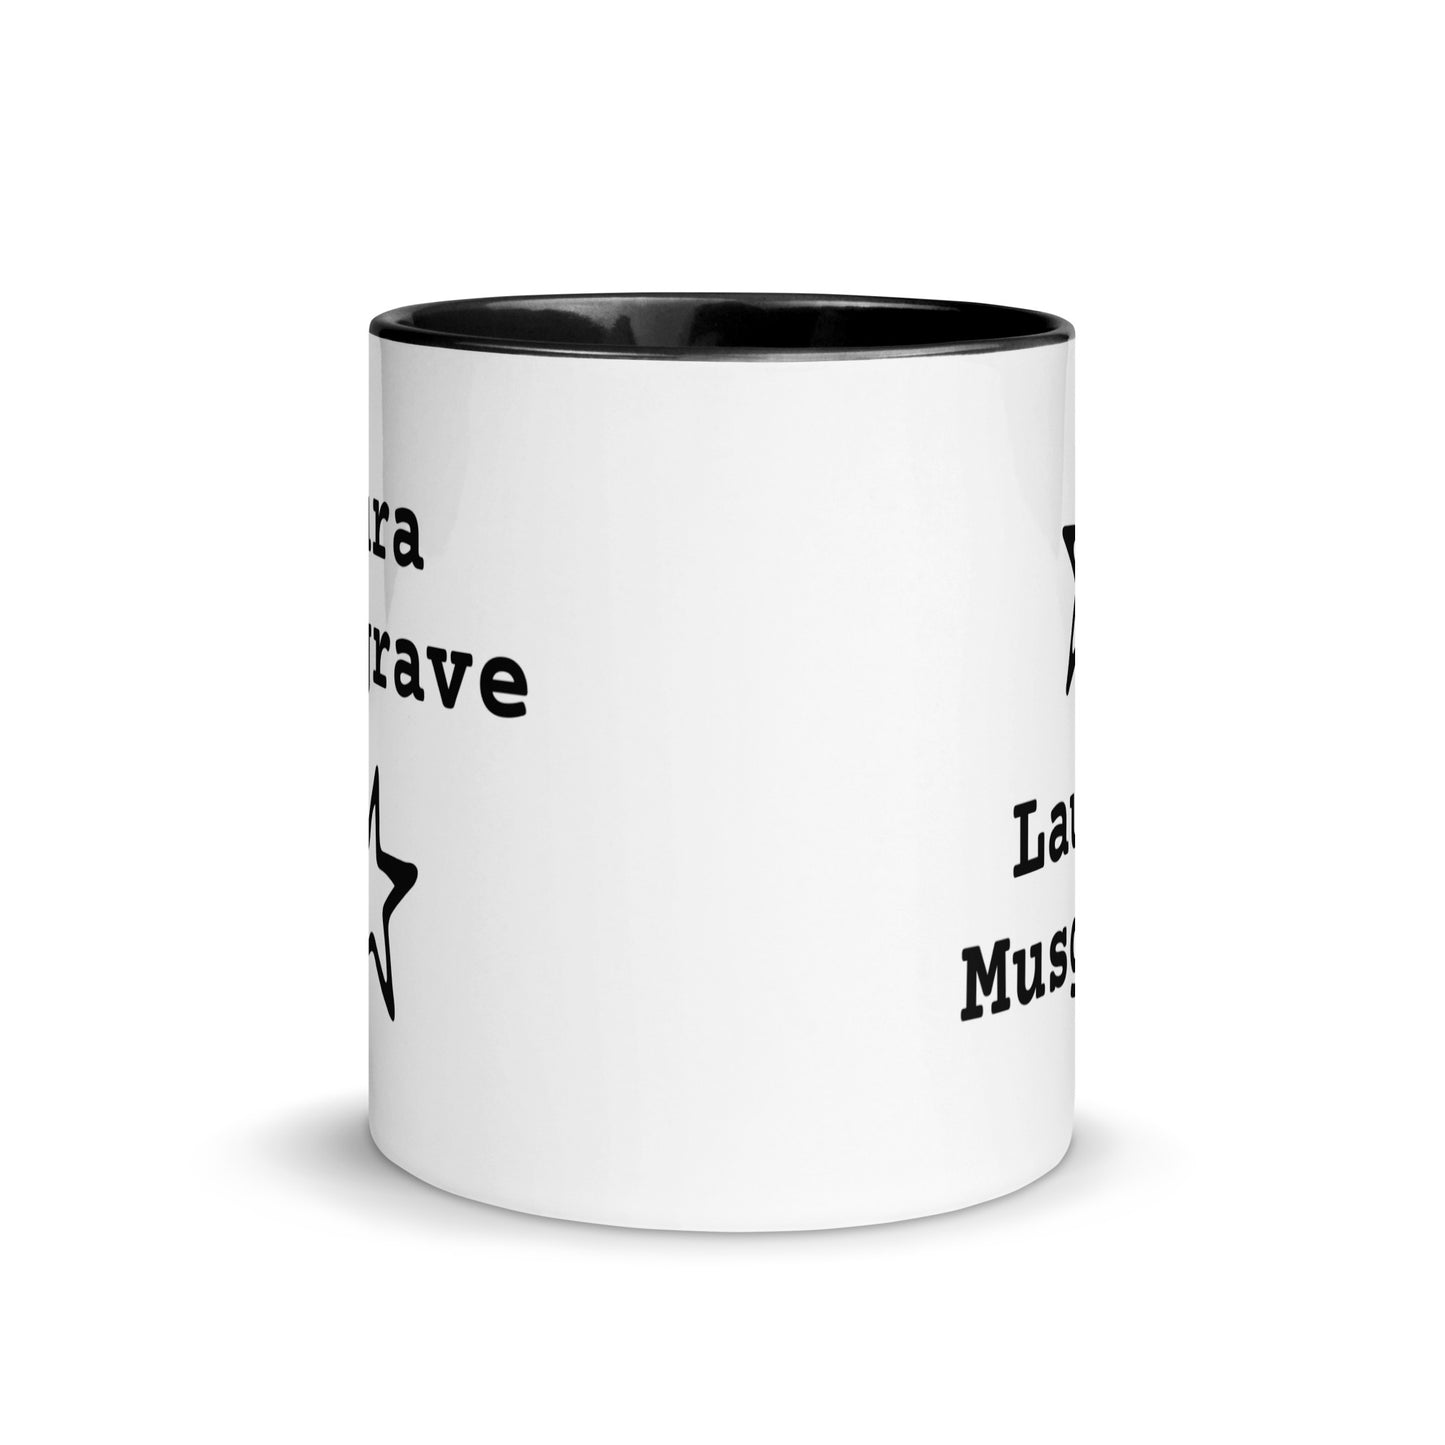 Black and white logo mug